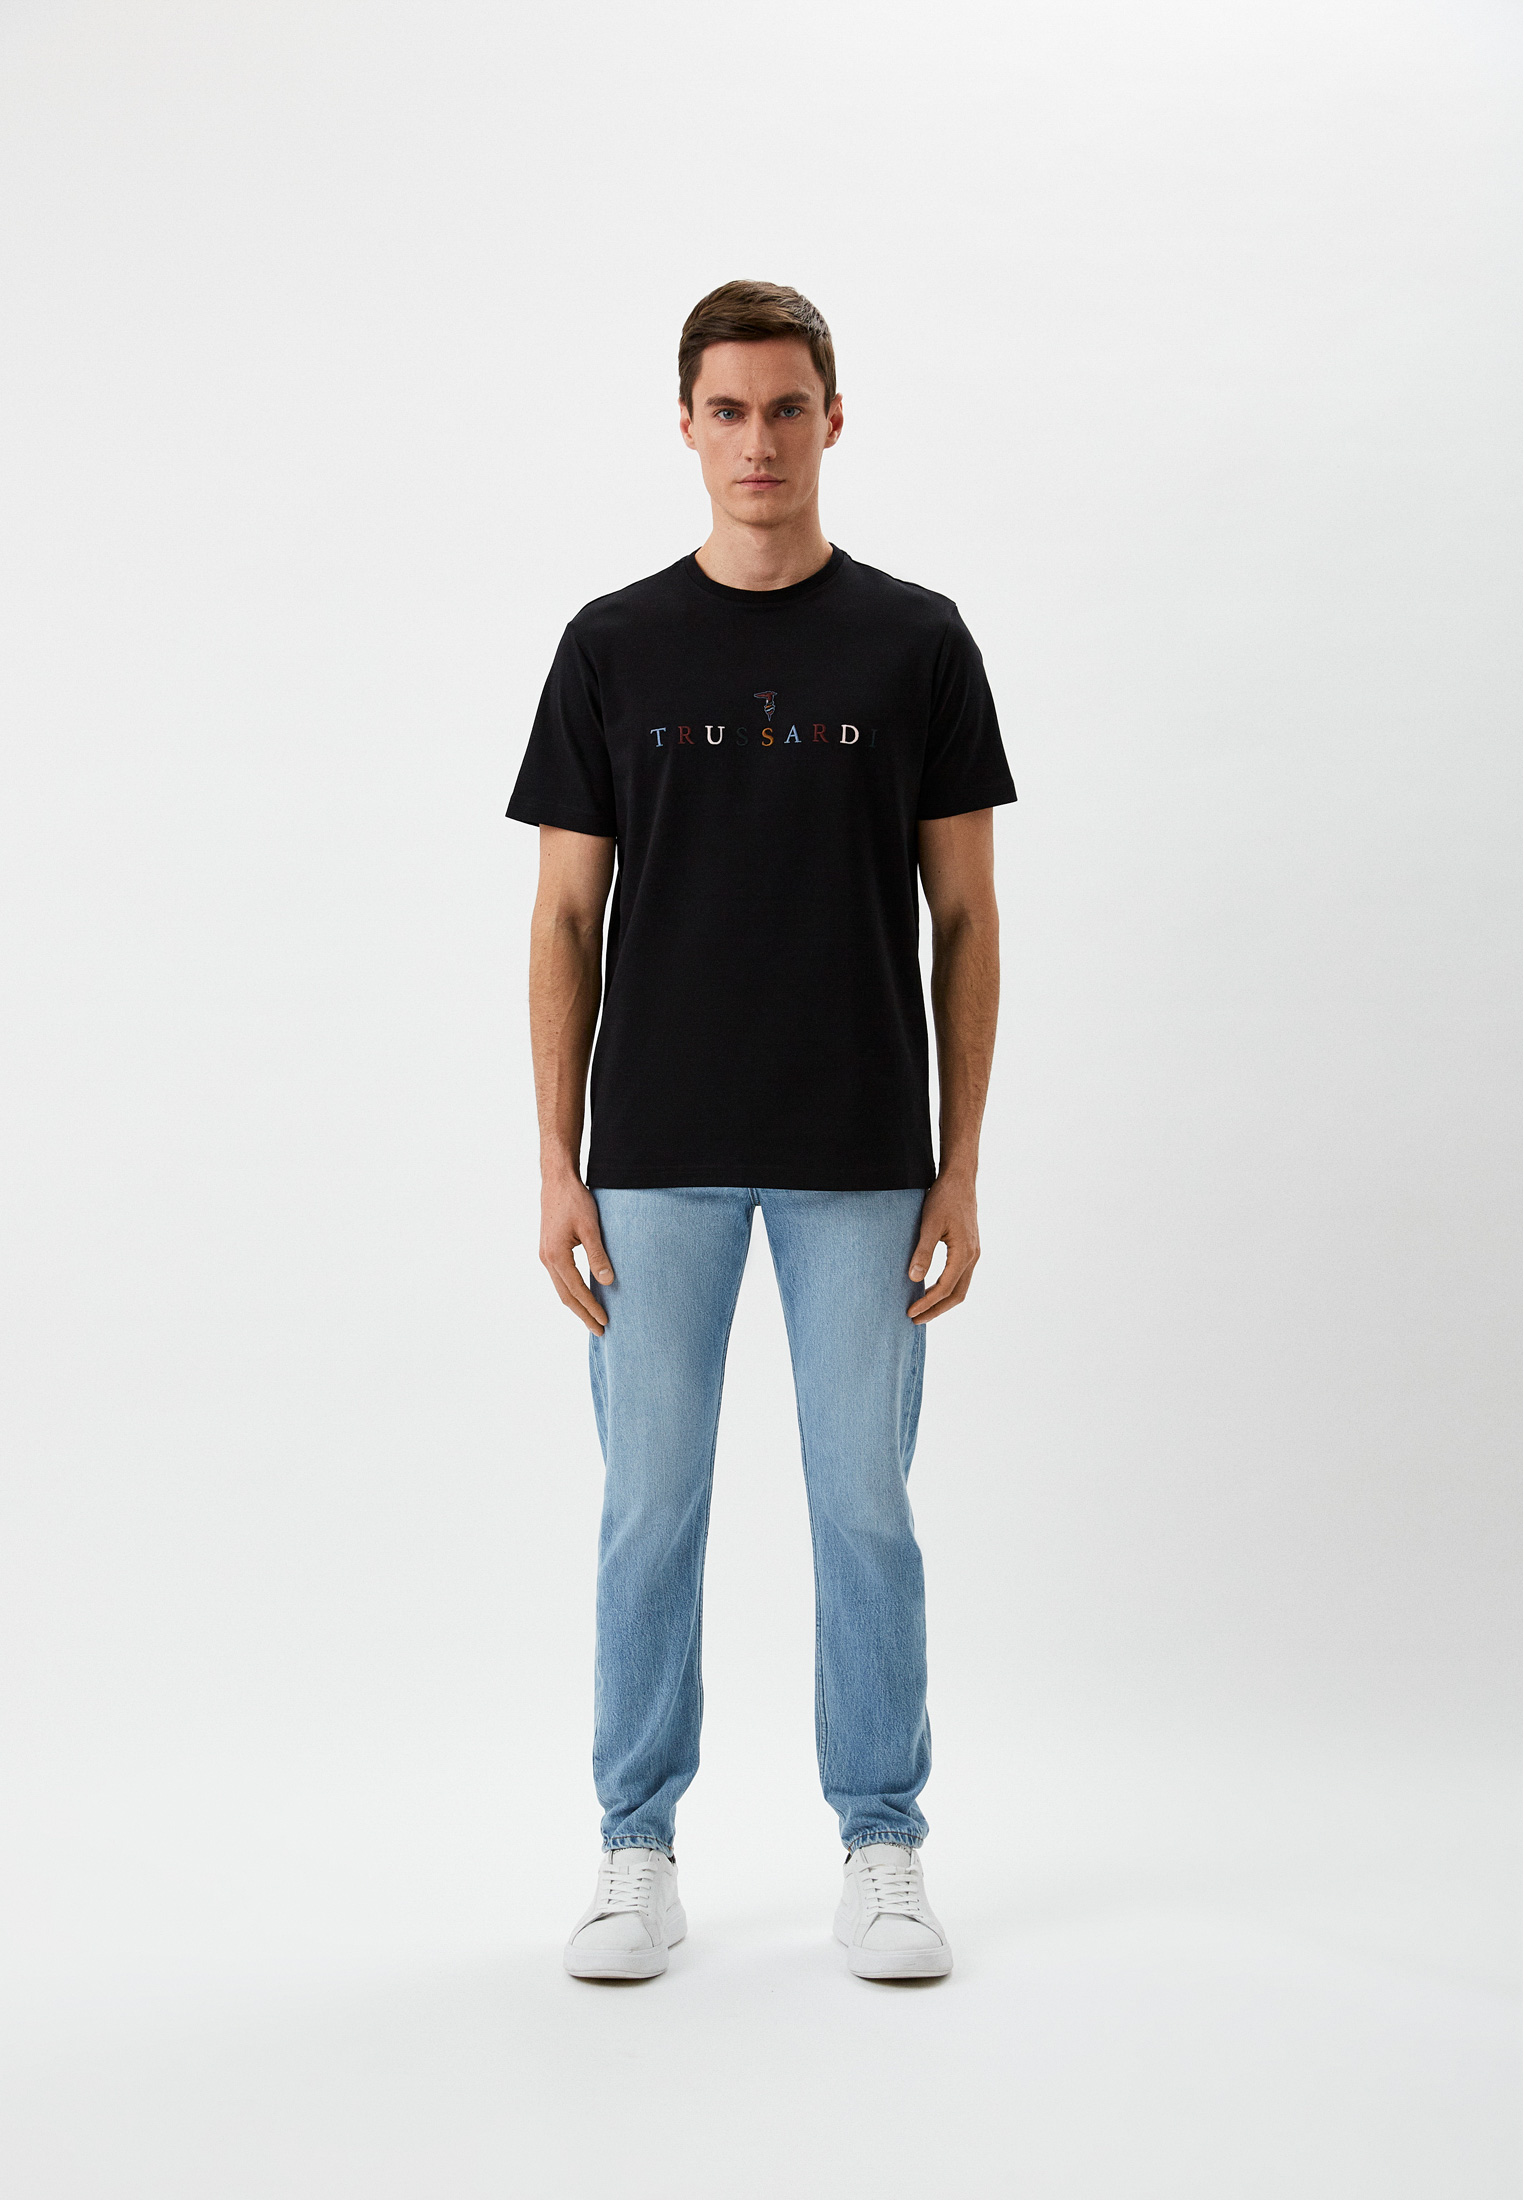 Мужская футболка Trussardi (Труссарди) 52T00565-1T004482: изображение 2